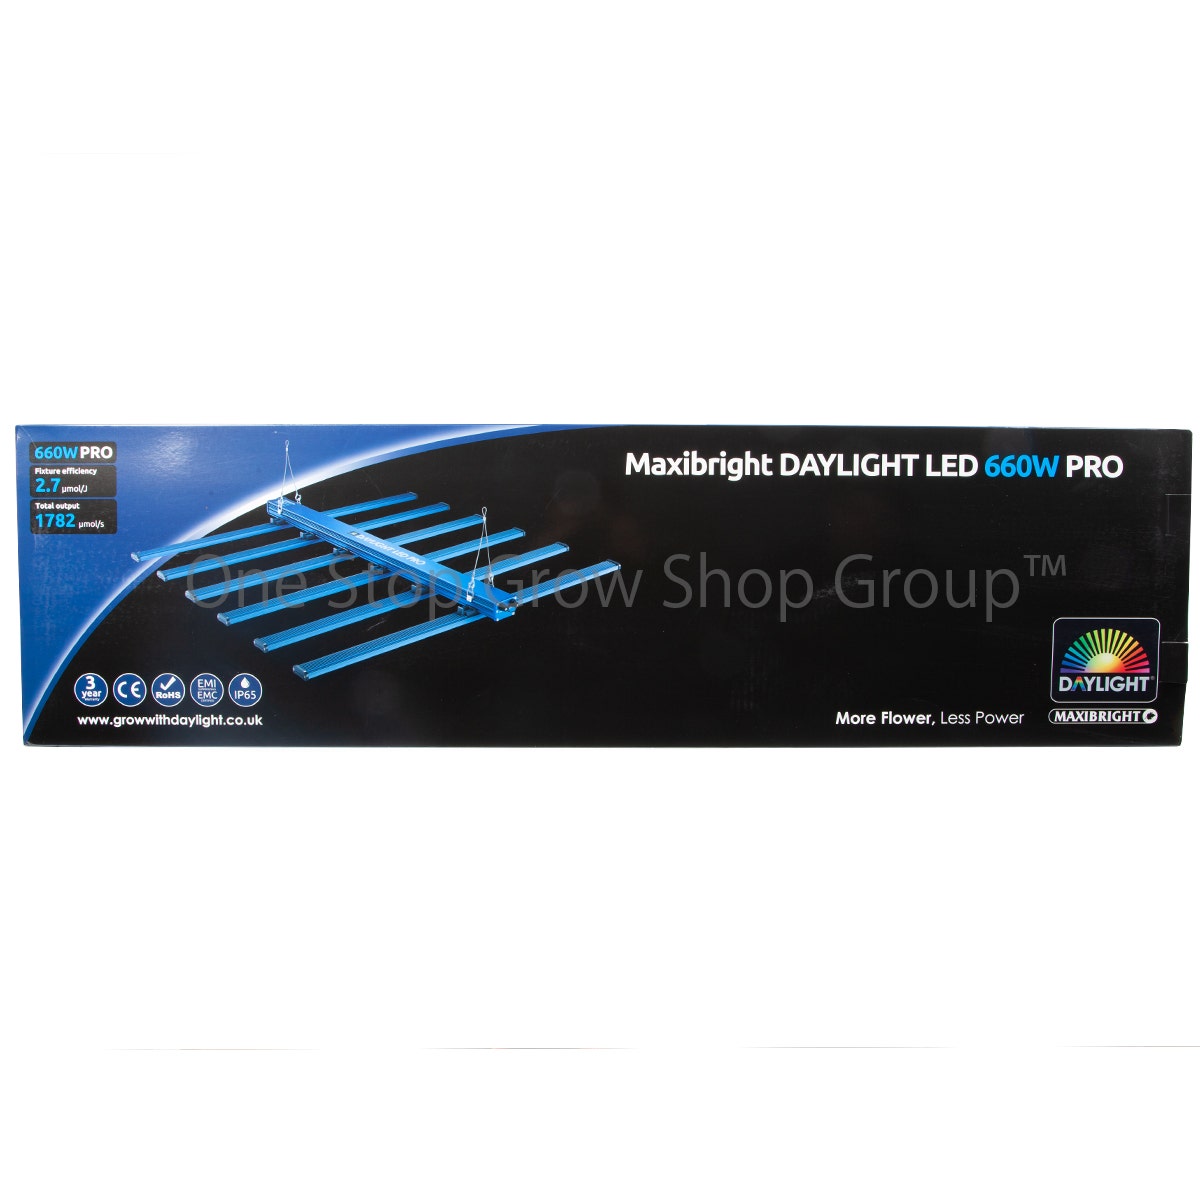 Maxibright Daylight LED 660w Pro Grow Light (Boxed)